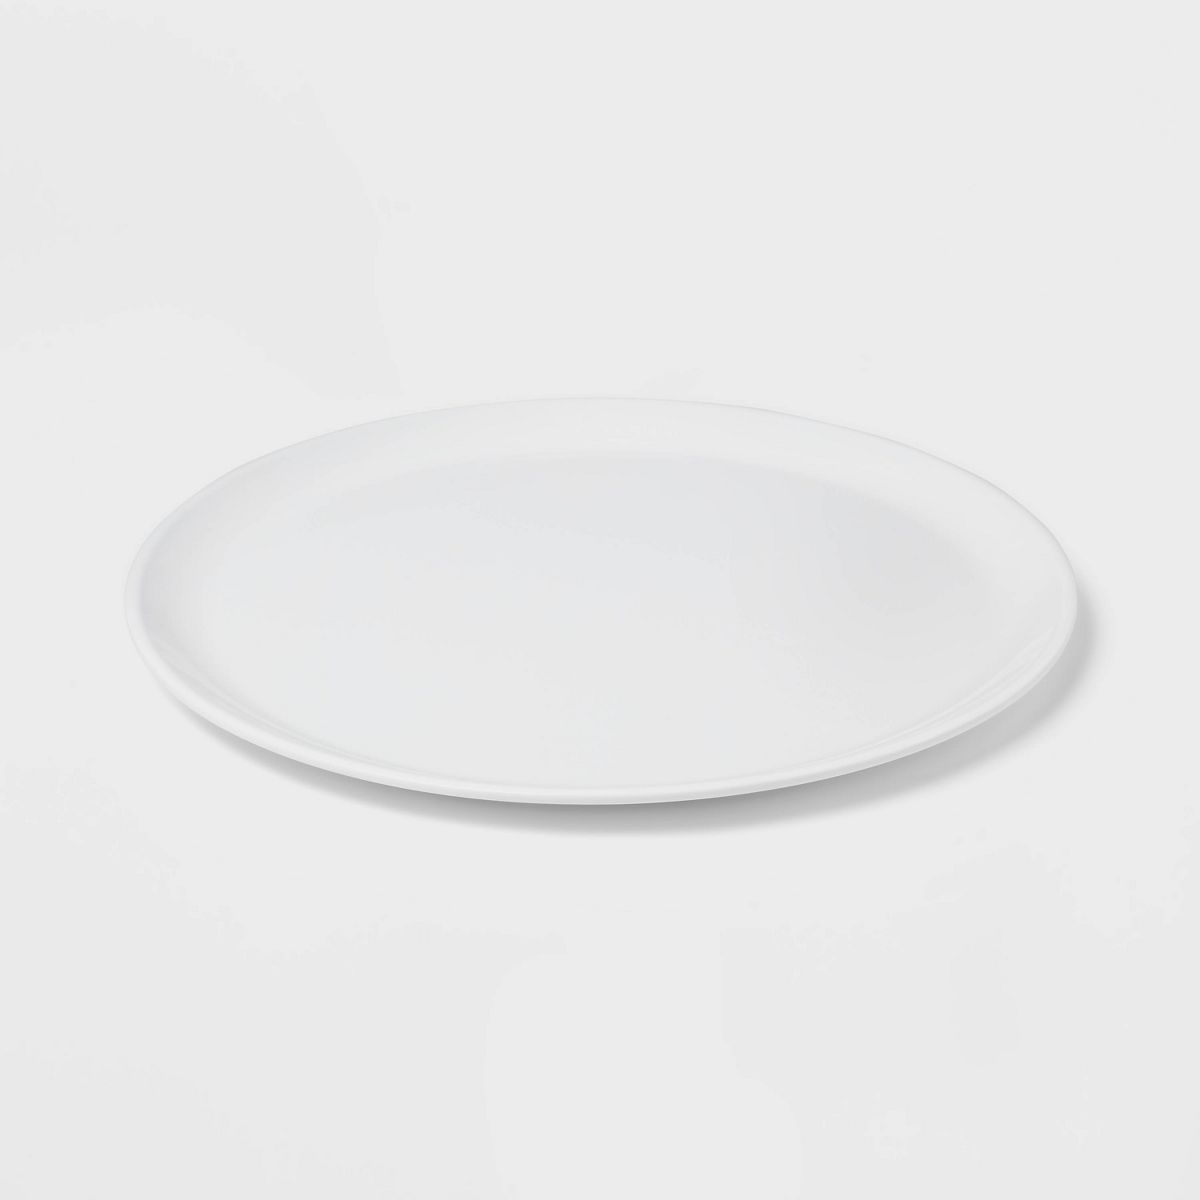 14"x14" Melamine Round Serving Plate White - Threshold™ | Target